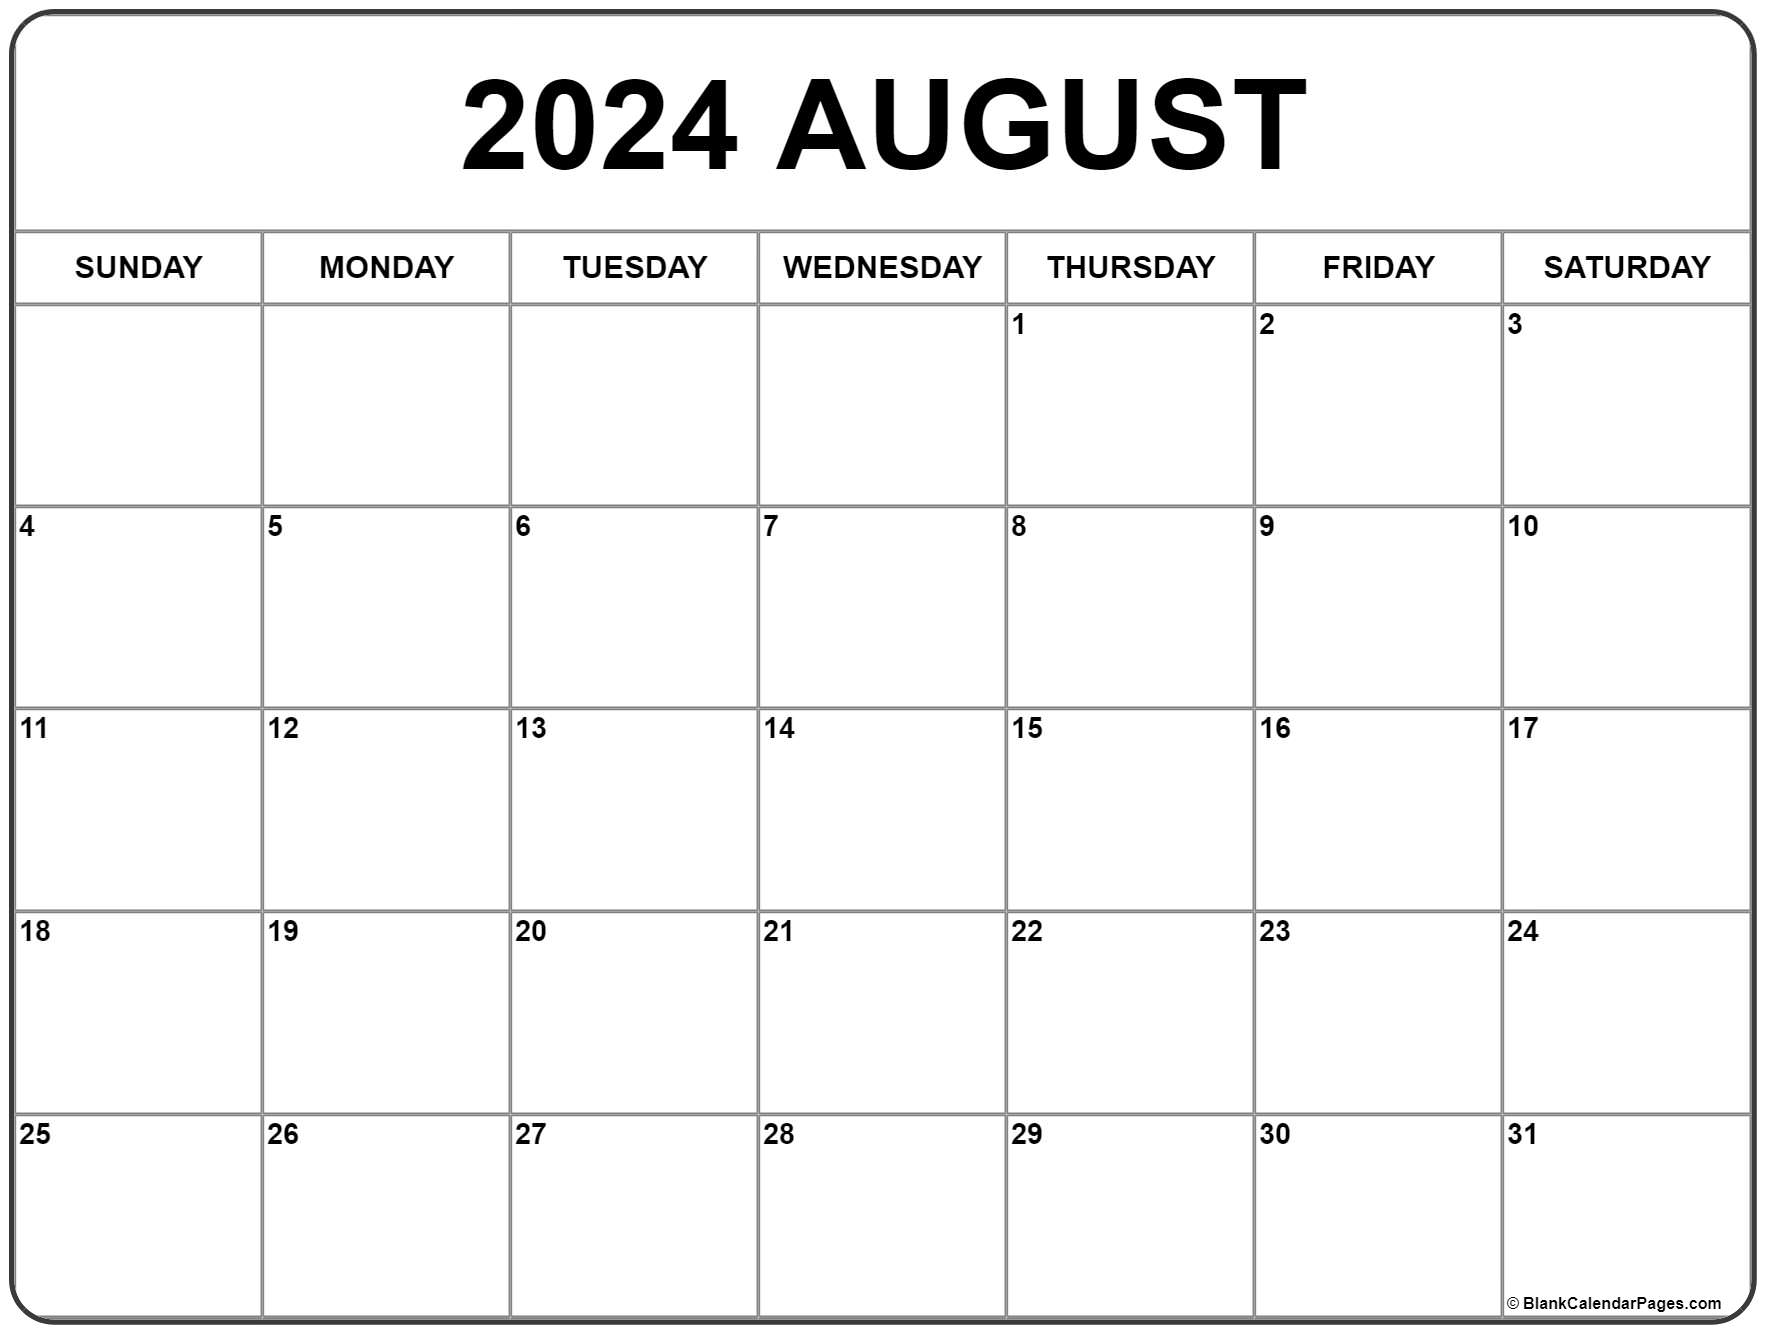 August 2021 Calendar Template August 2021 calendar | free printable monthly calendars